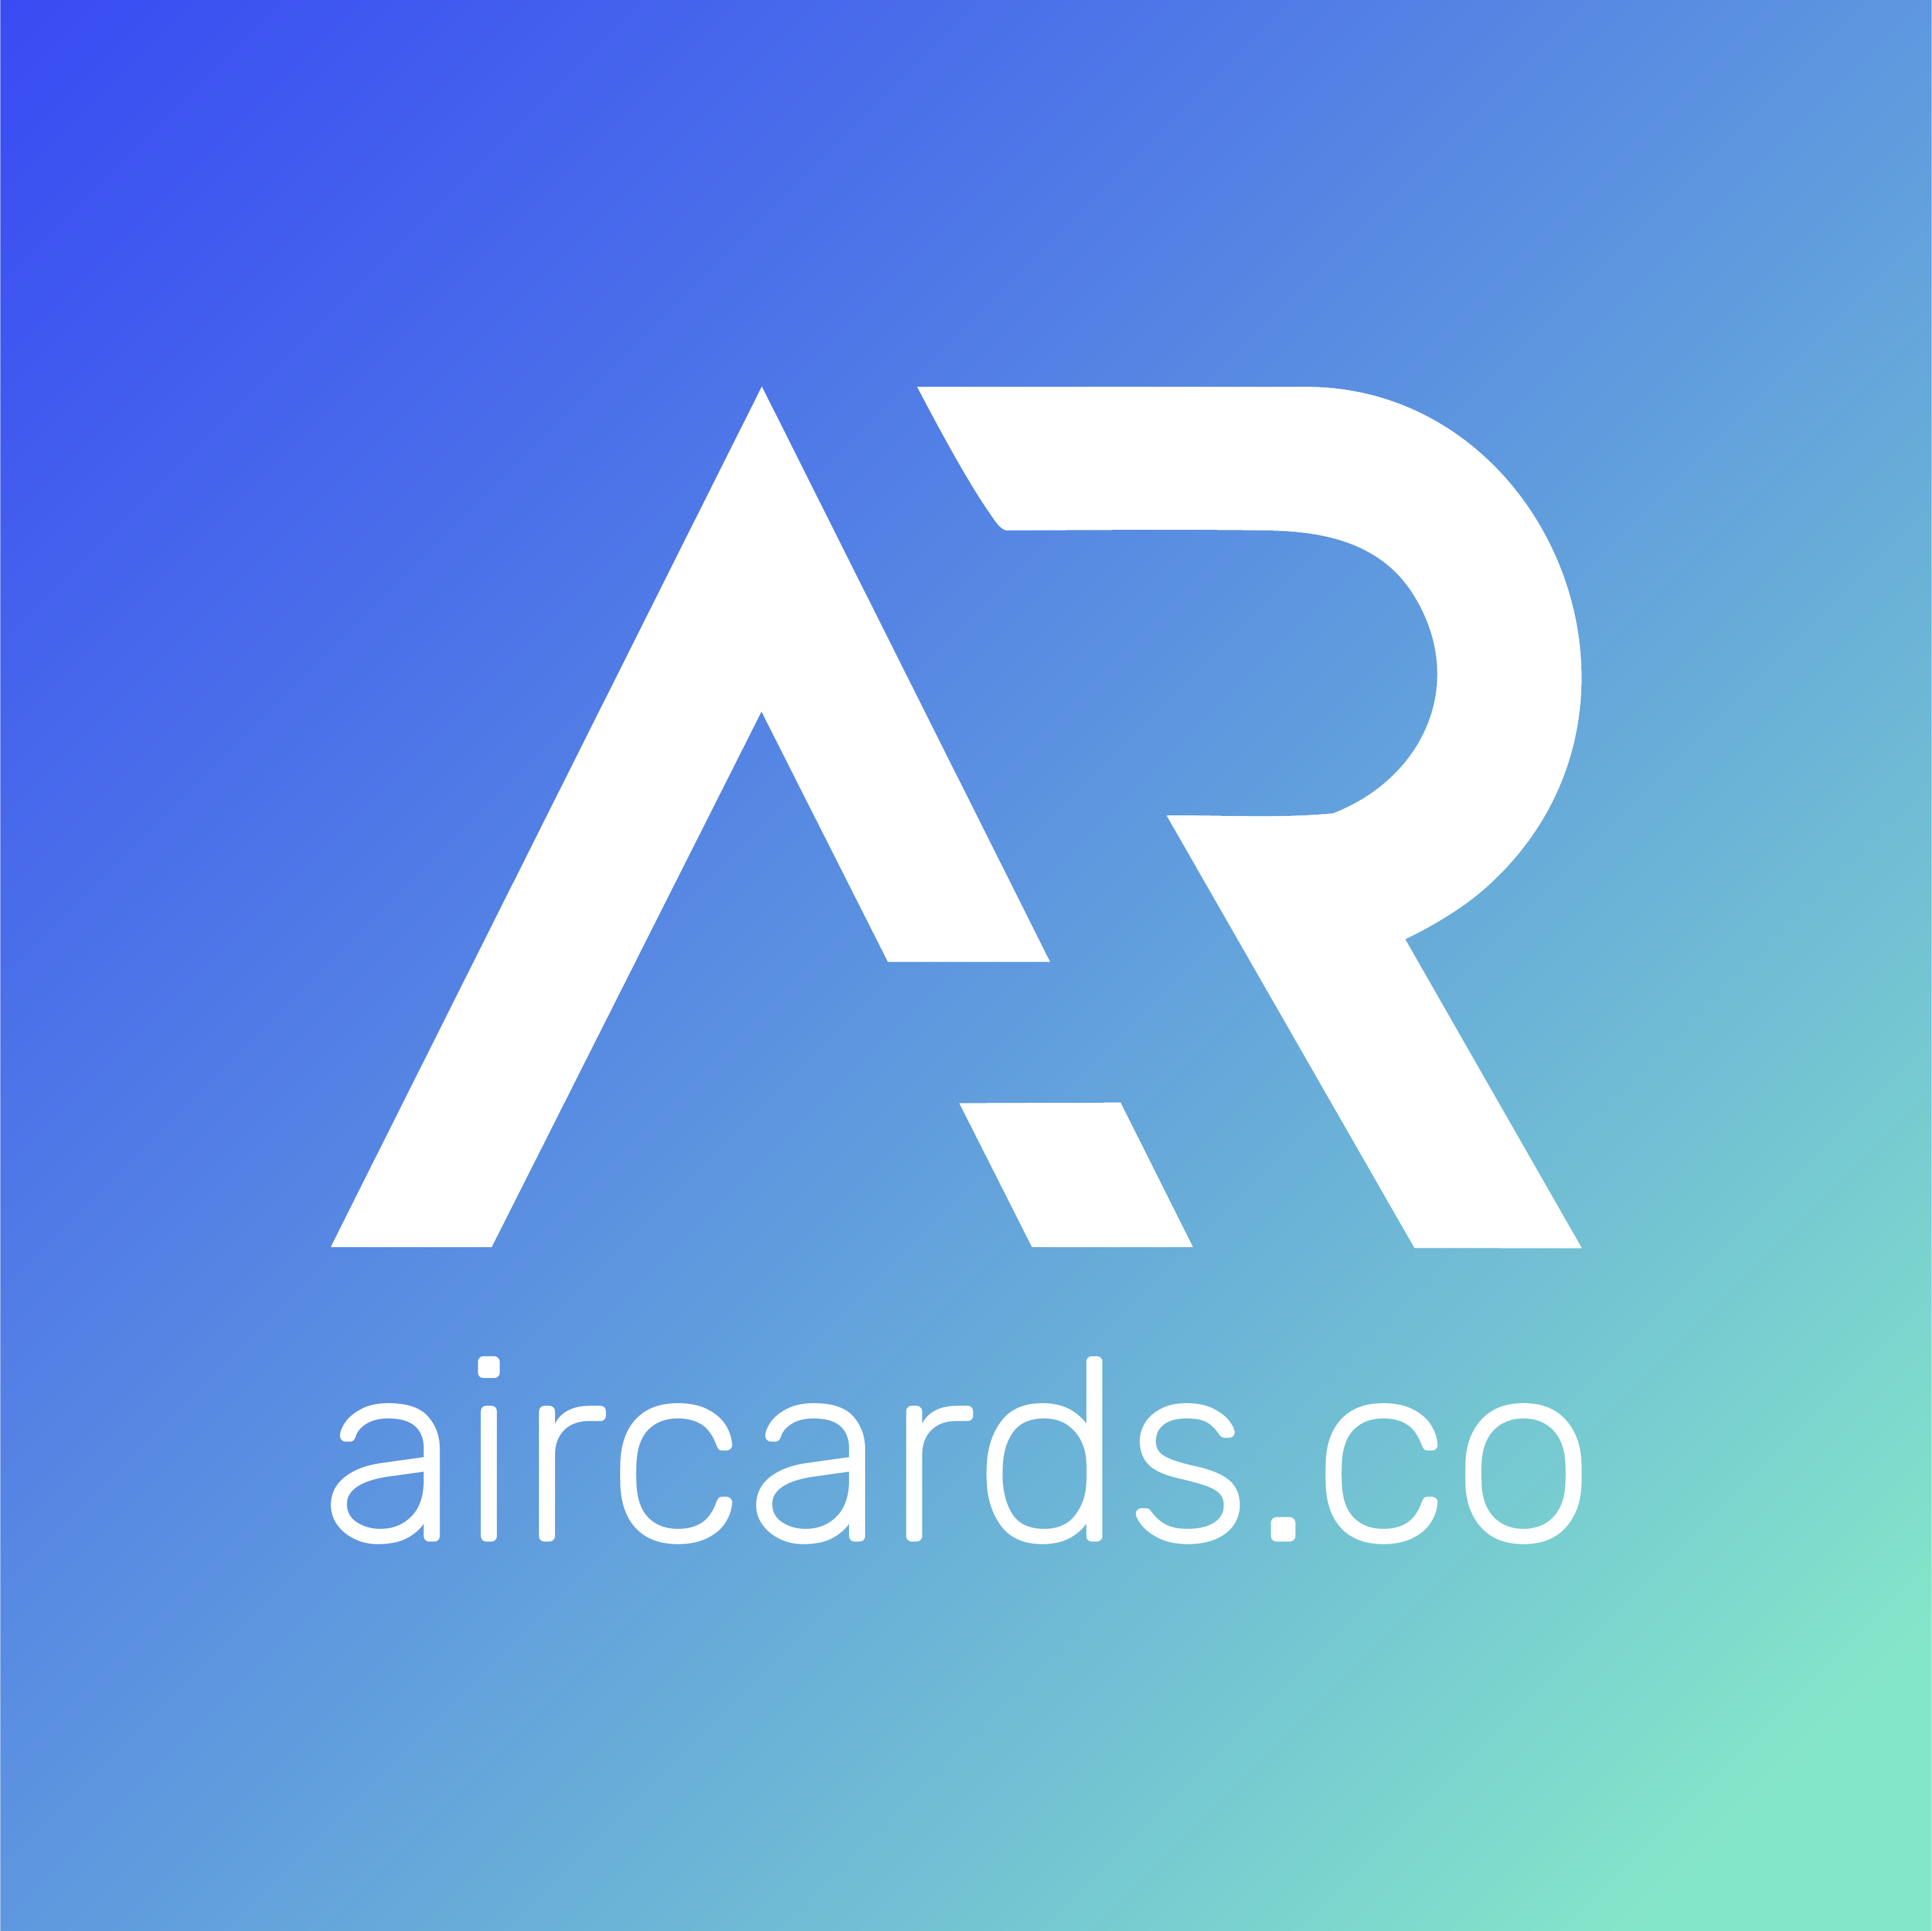 Aircards